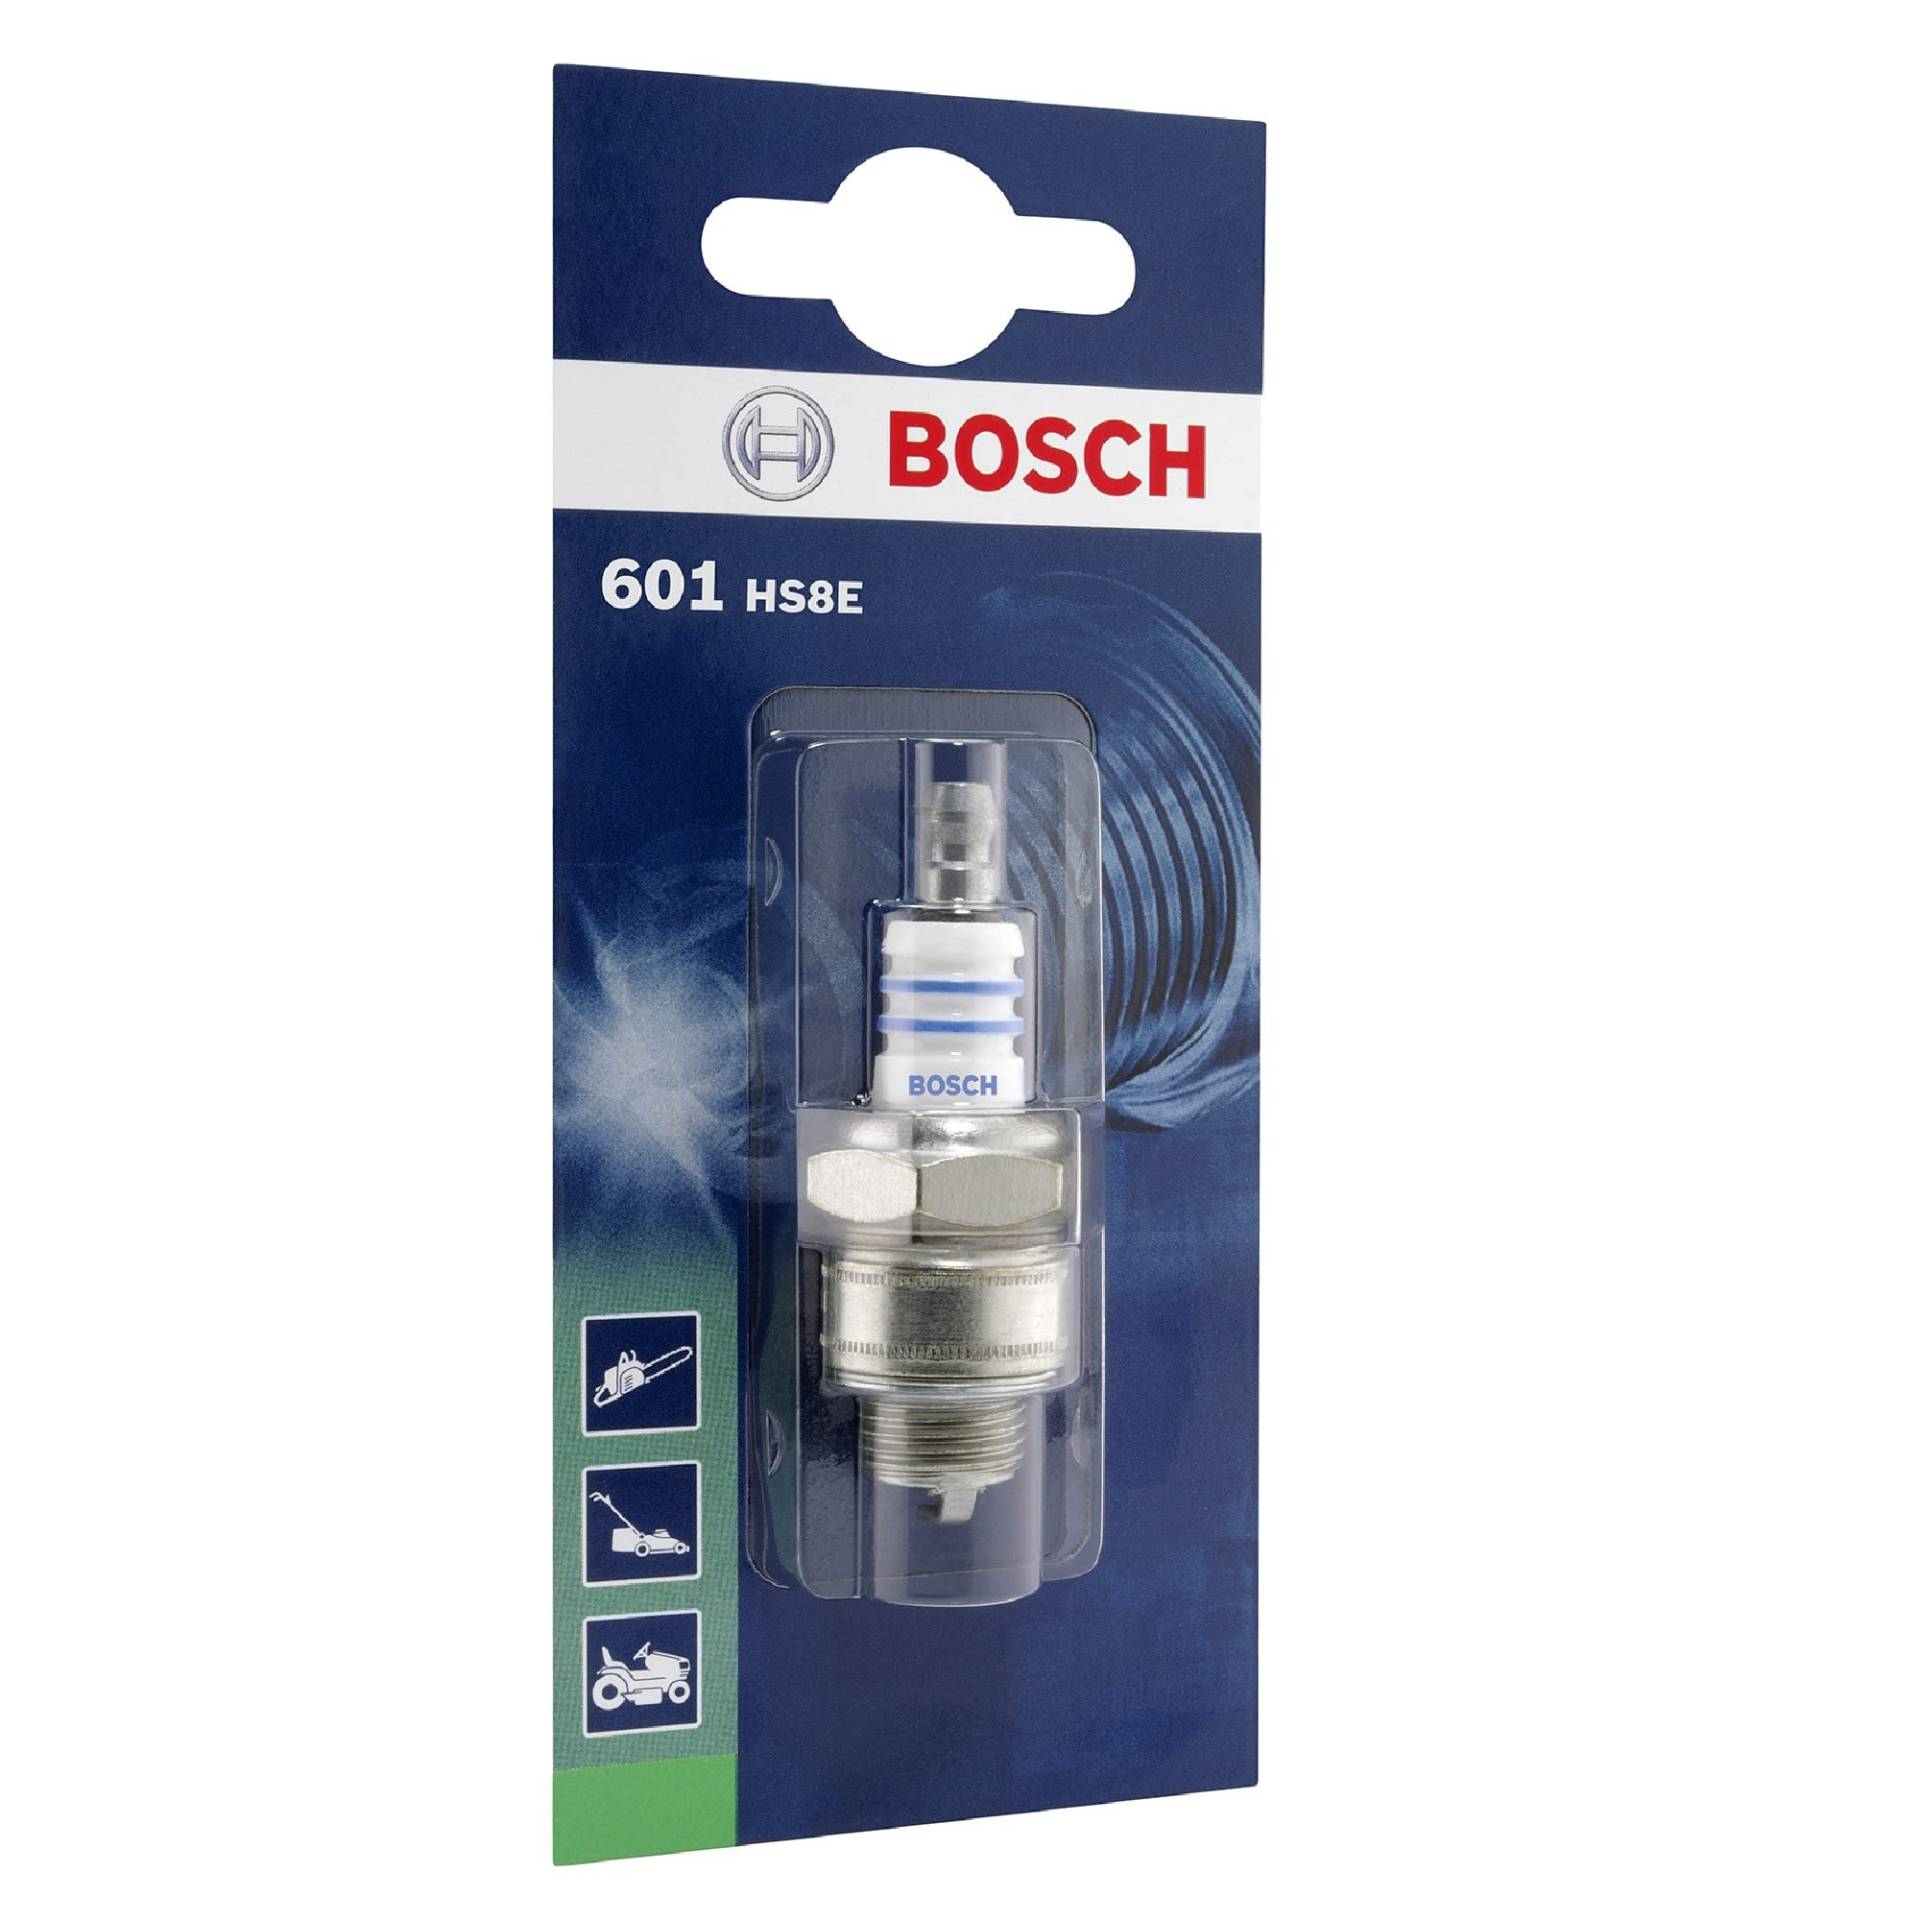 Bosch HS8E (601) - Zündkerze für Gartengeräte - 1 Stück von Bosch Automotive